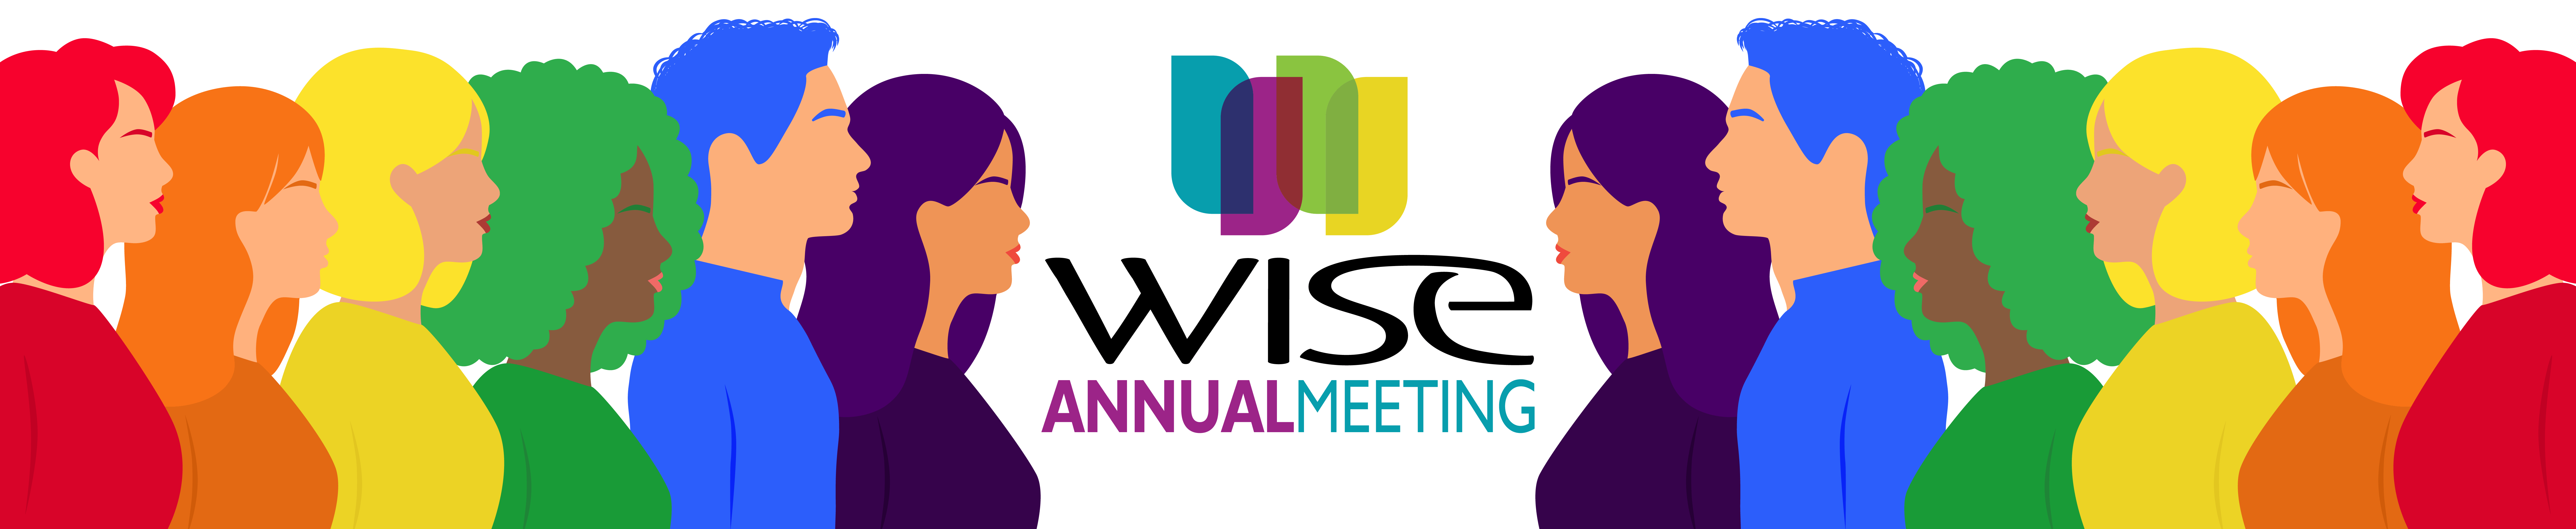 WISE-433 Annual Mtg WebPage Header 02